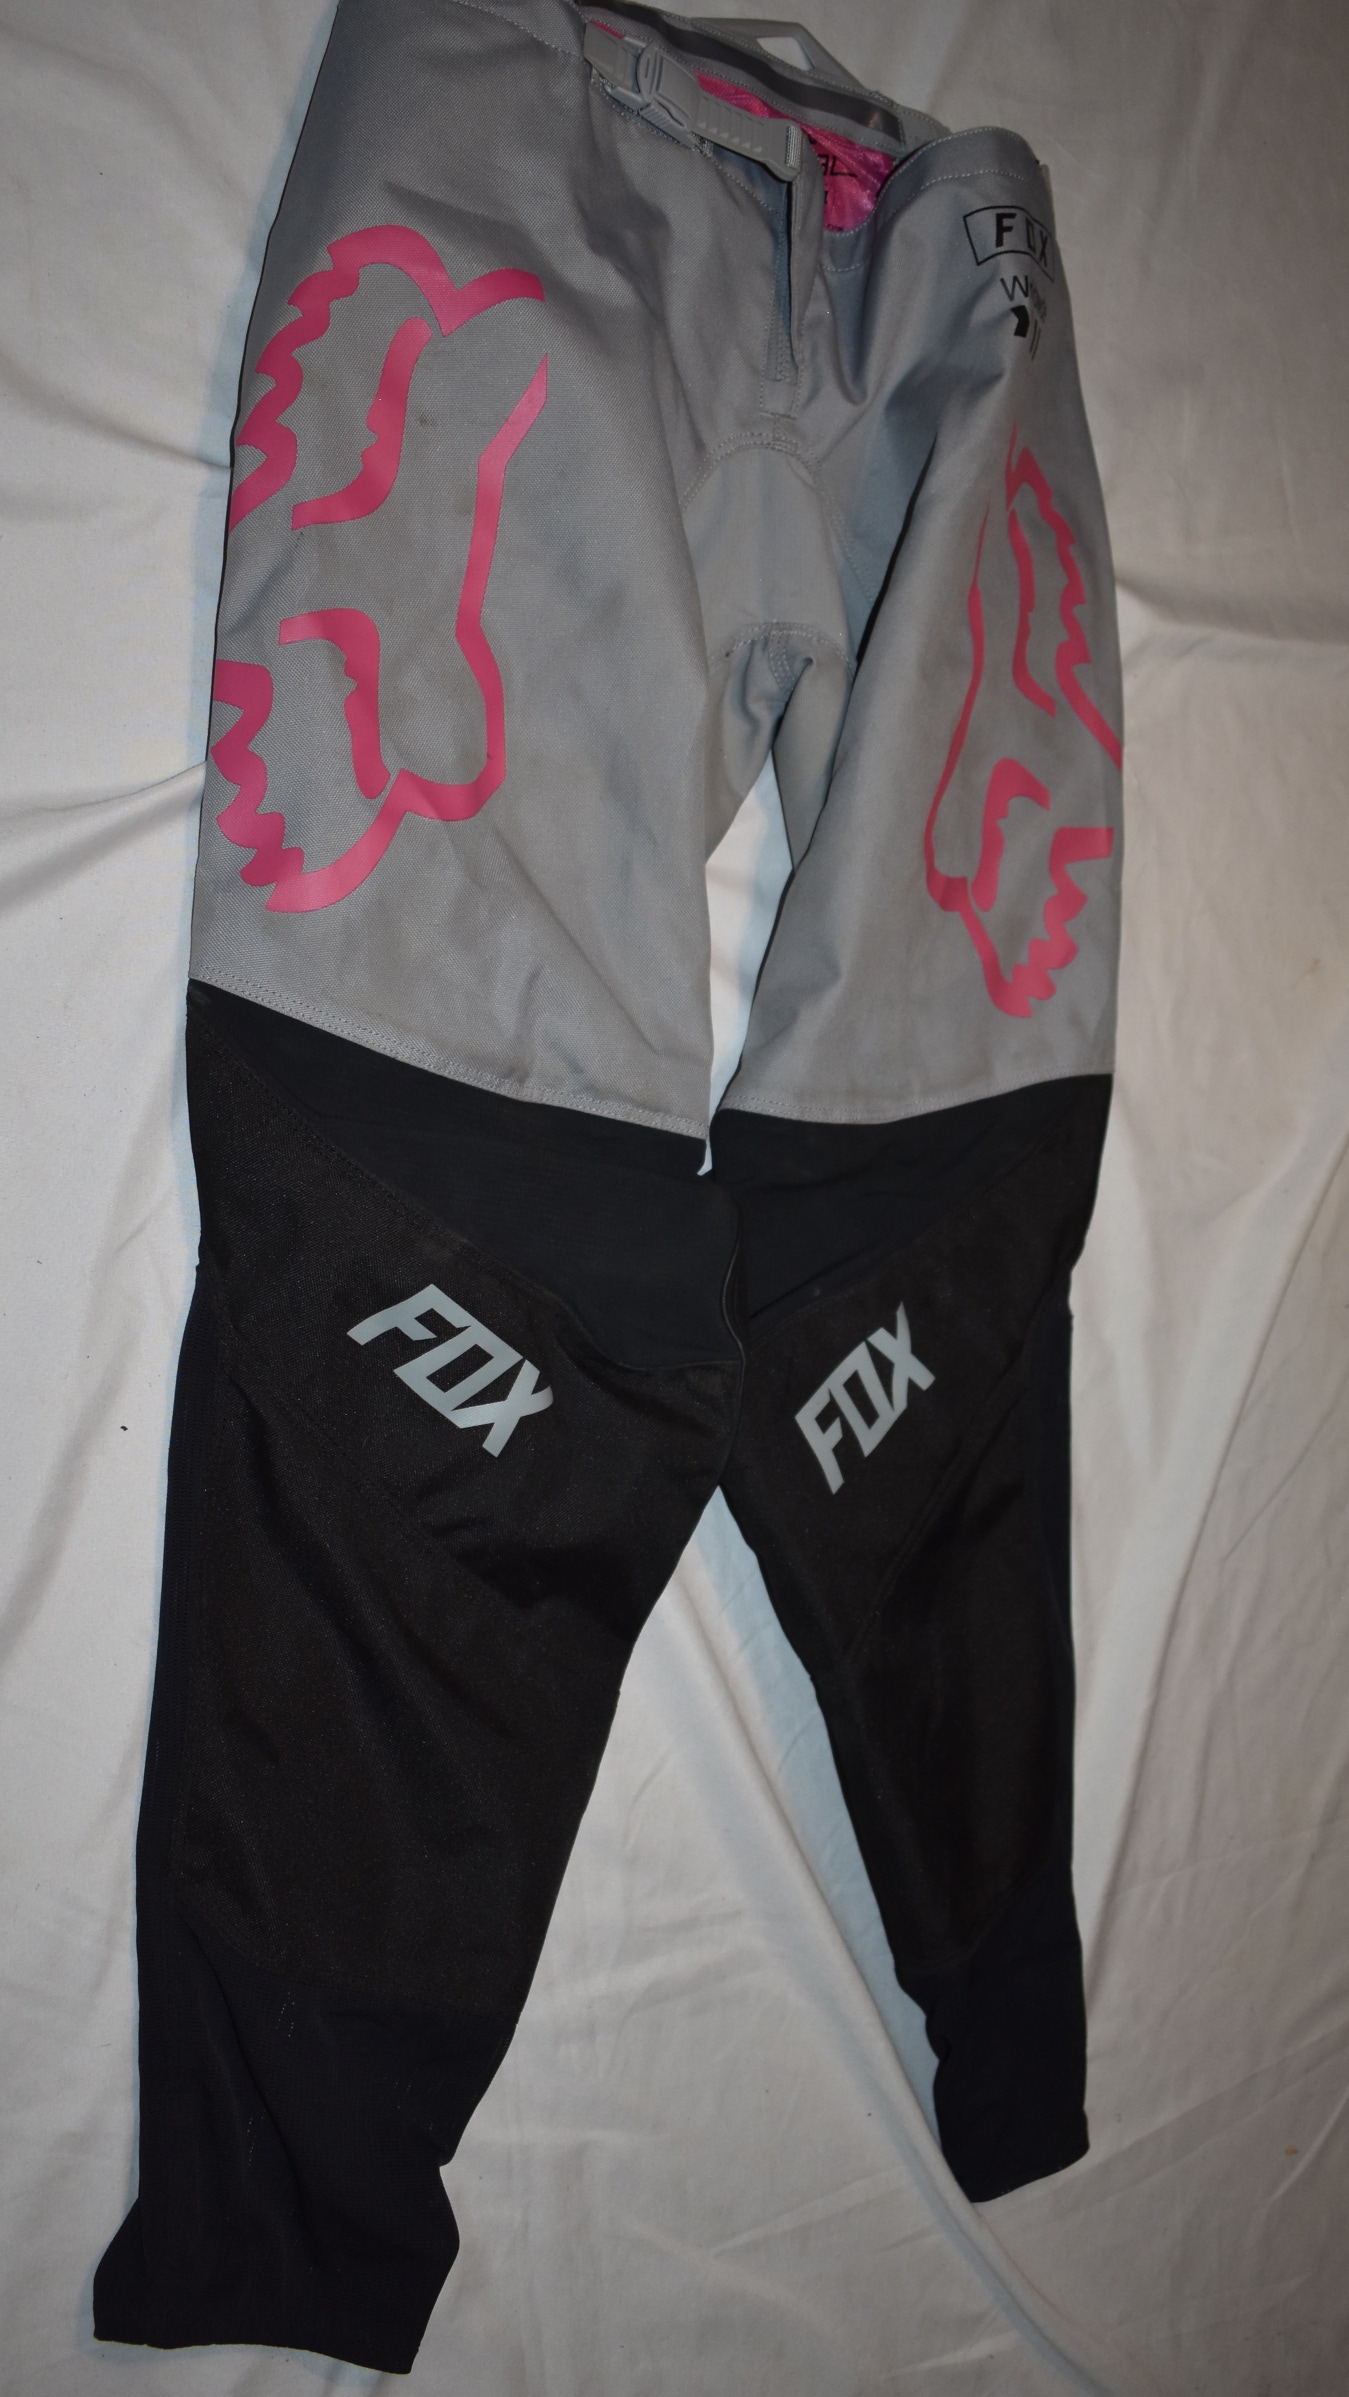 FOX 180 Wrldwde Motocross Pants, Gray/Black/Pink, Size 4 - Great Condition!